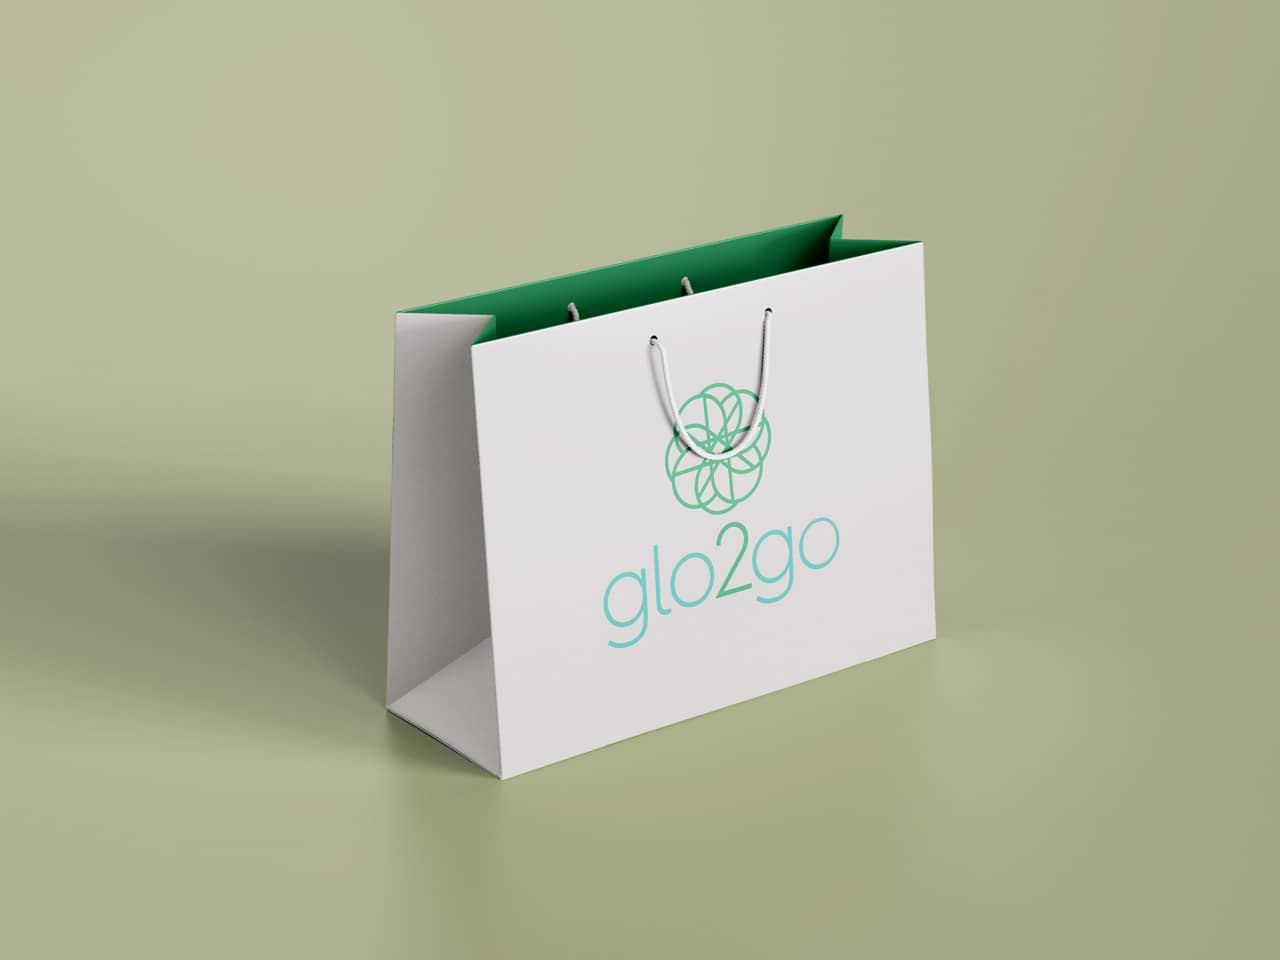 project glo2go logo on bag